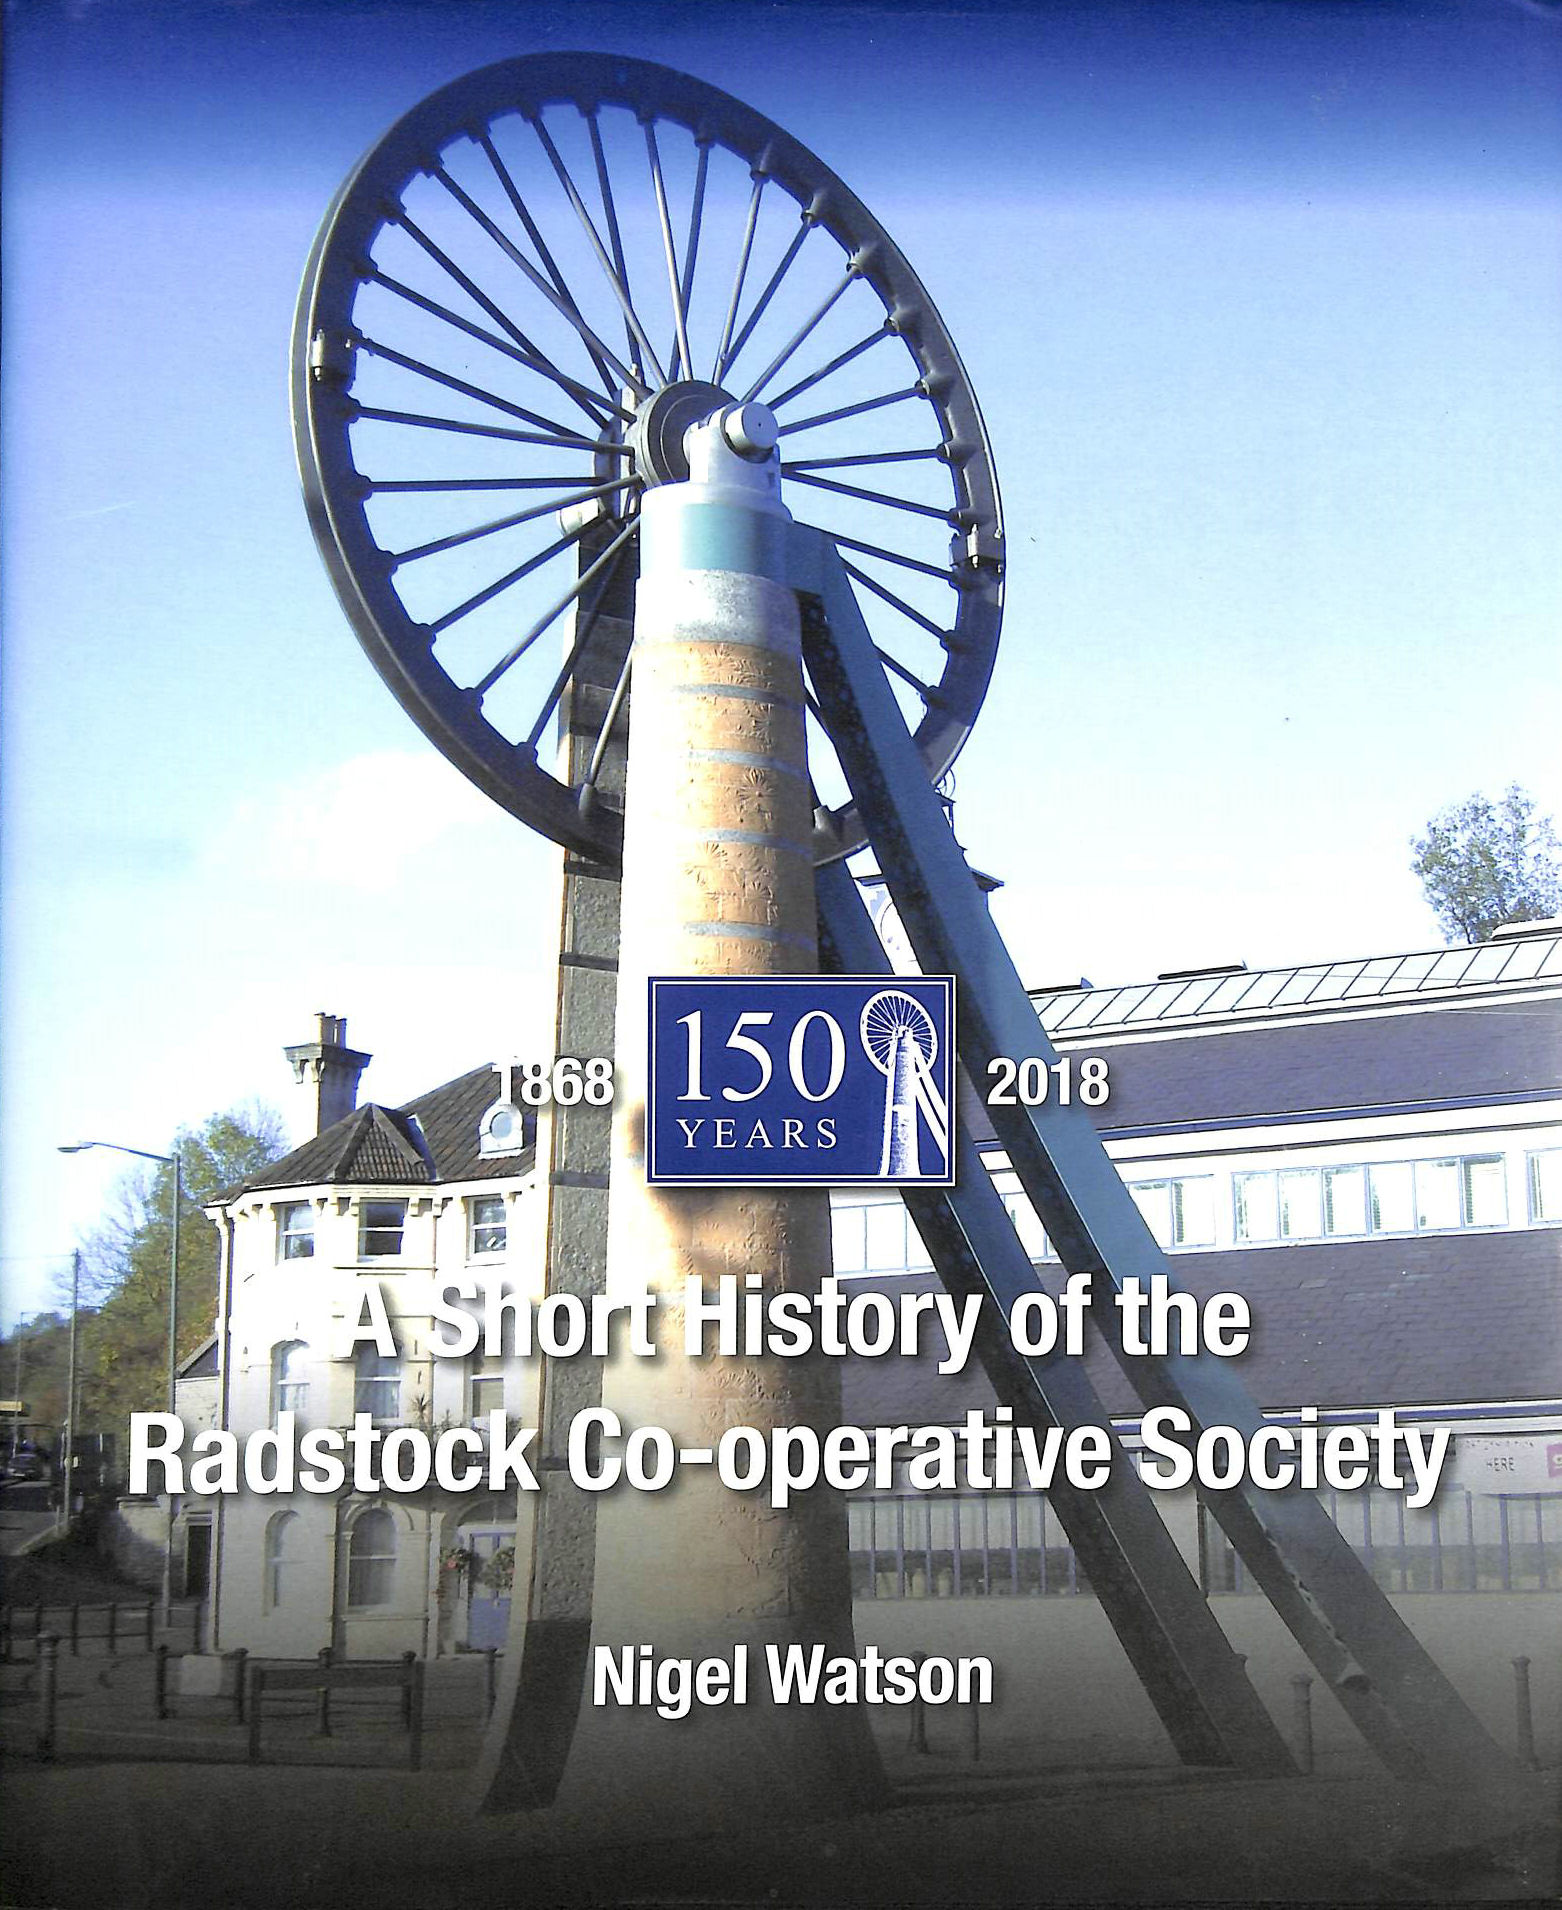 NIGEL WATSON - A Short History of the Radstock Co-operative Society